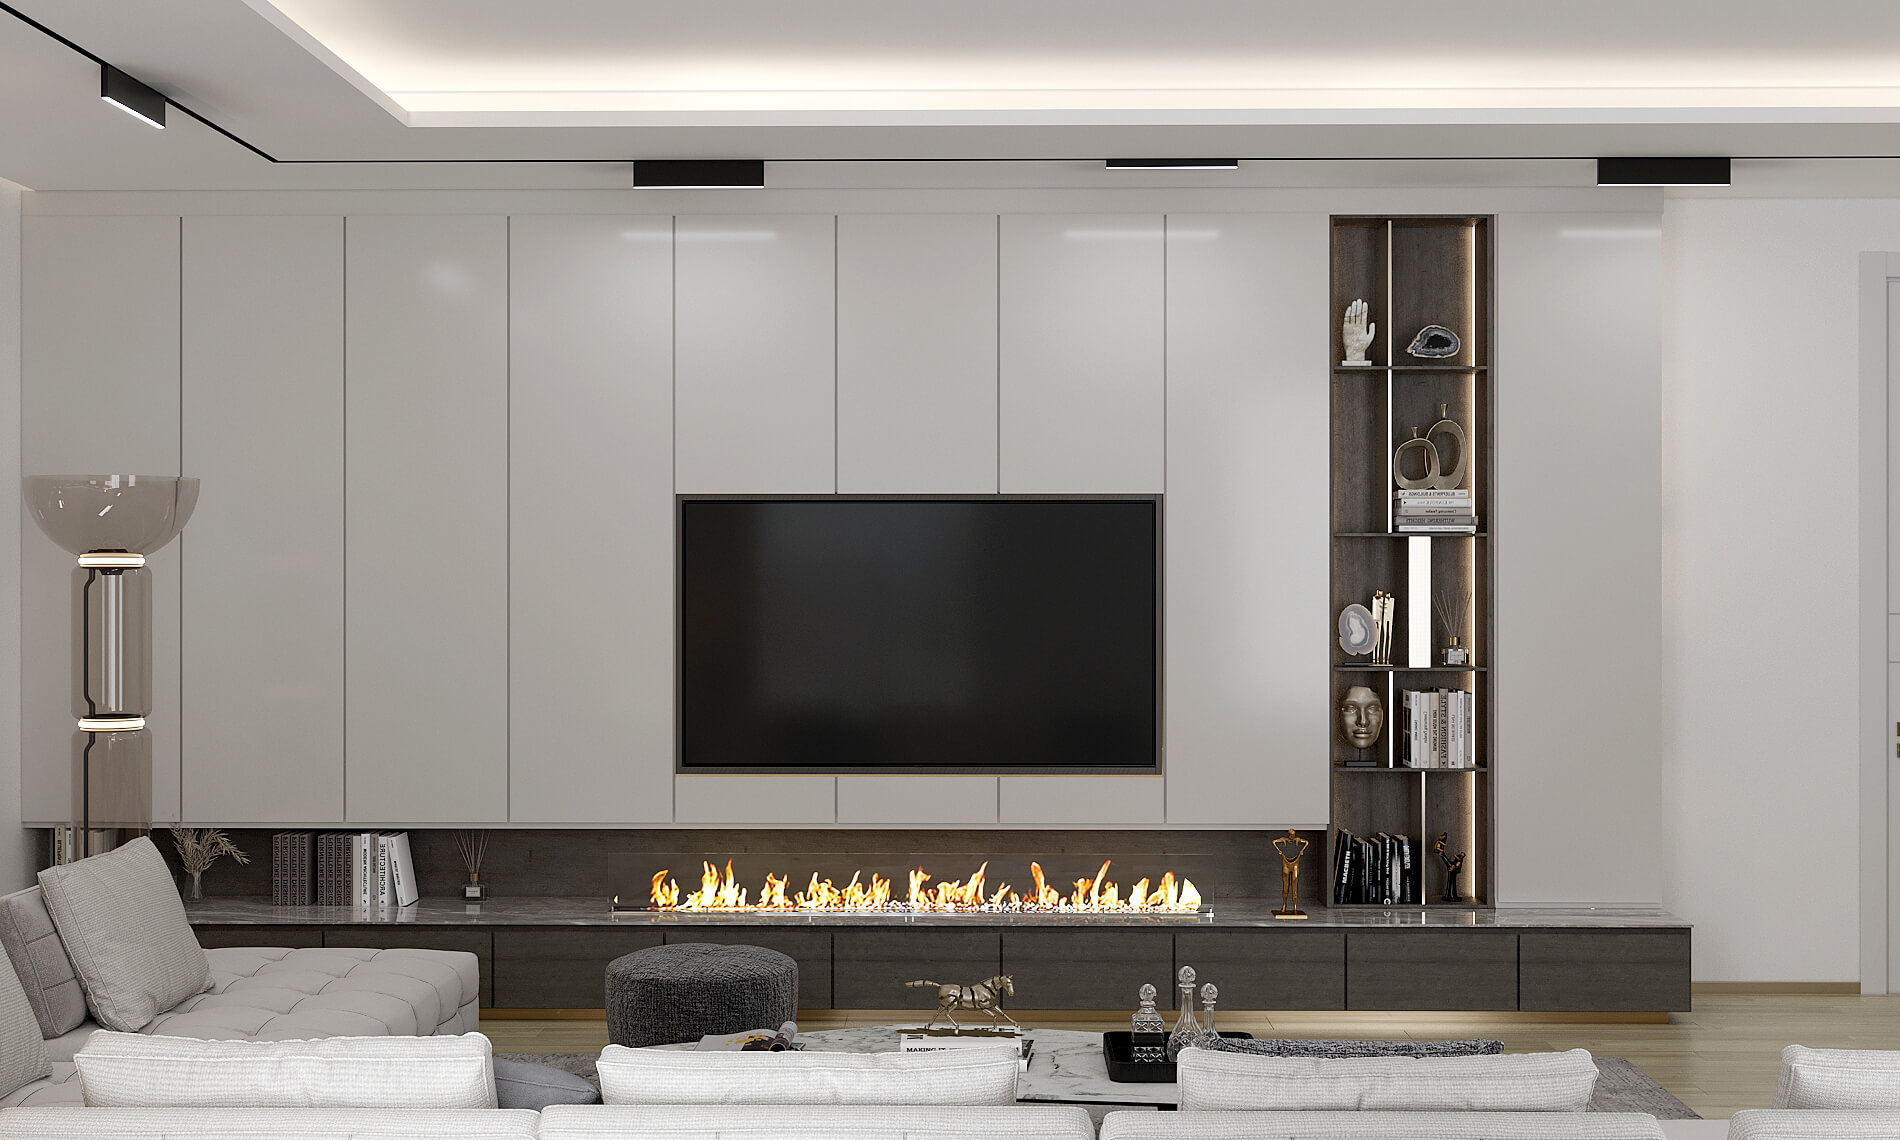 Luxurious interior design by Emkaan in Dubai featuring a stunning Biofire fireplace